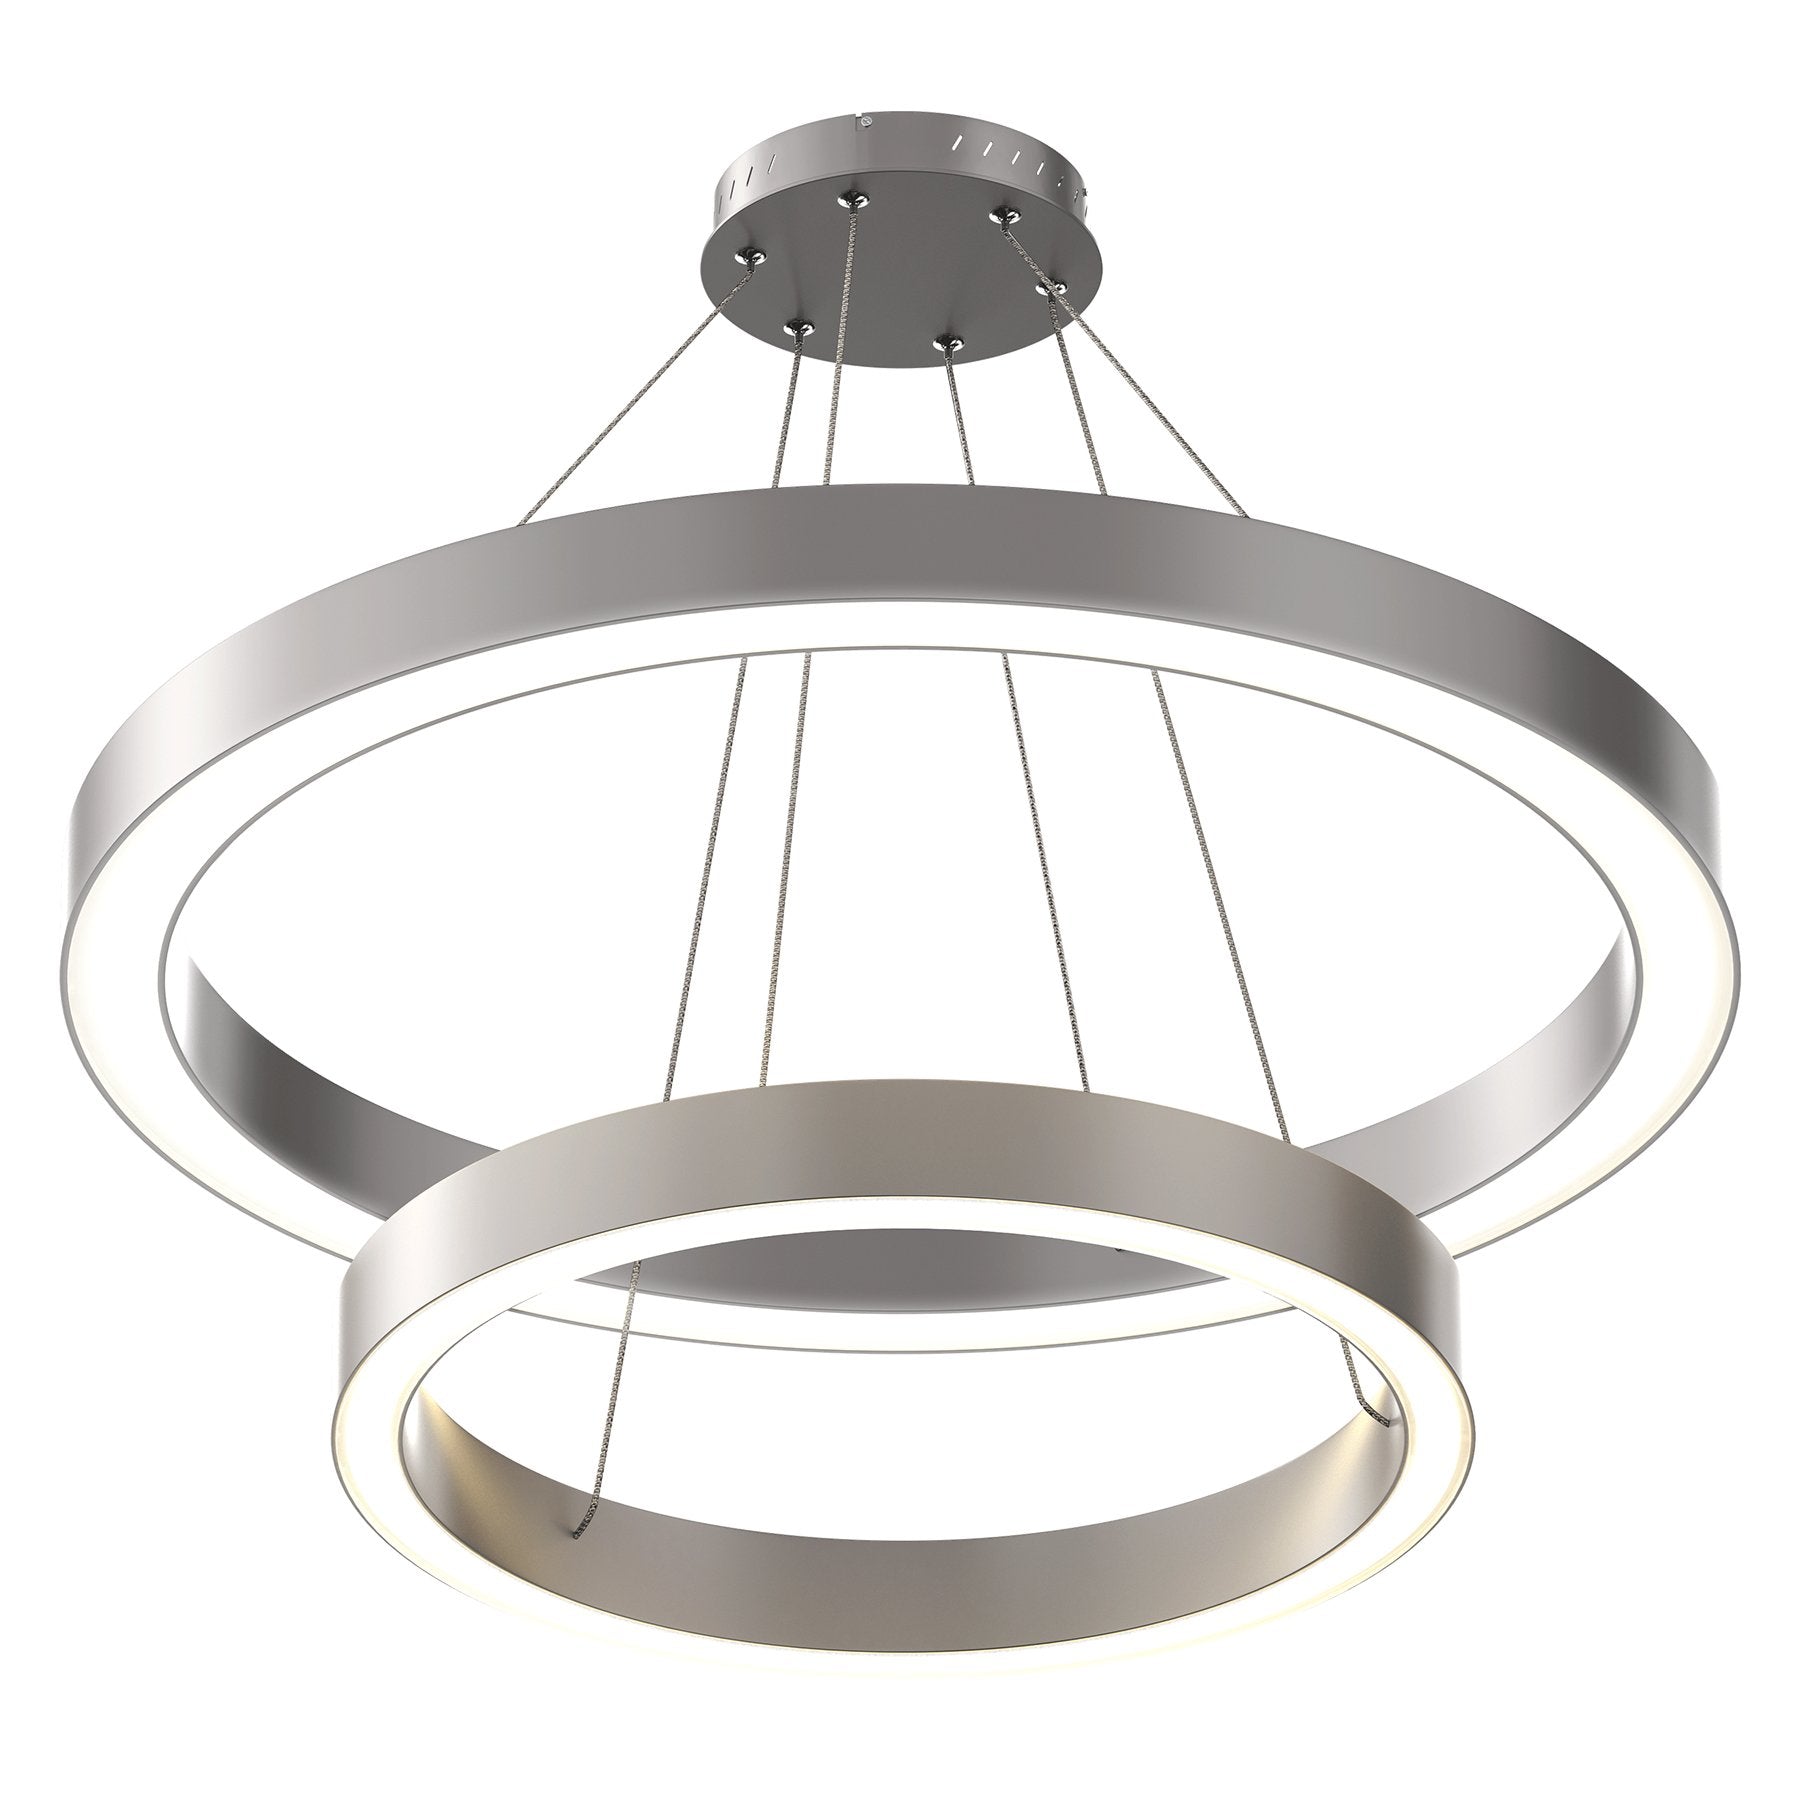 modern-double-ring-chandelier-115w-3000k-5750lm-aluminium-body-finish